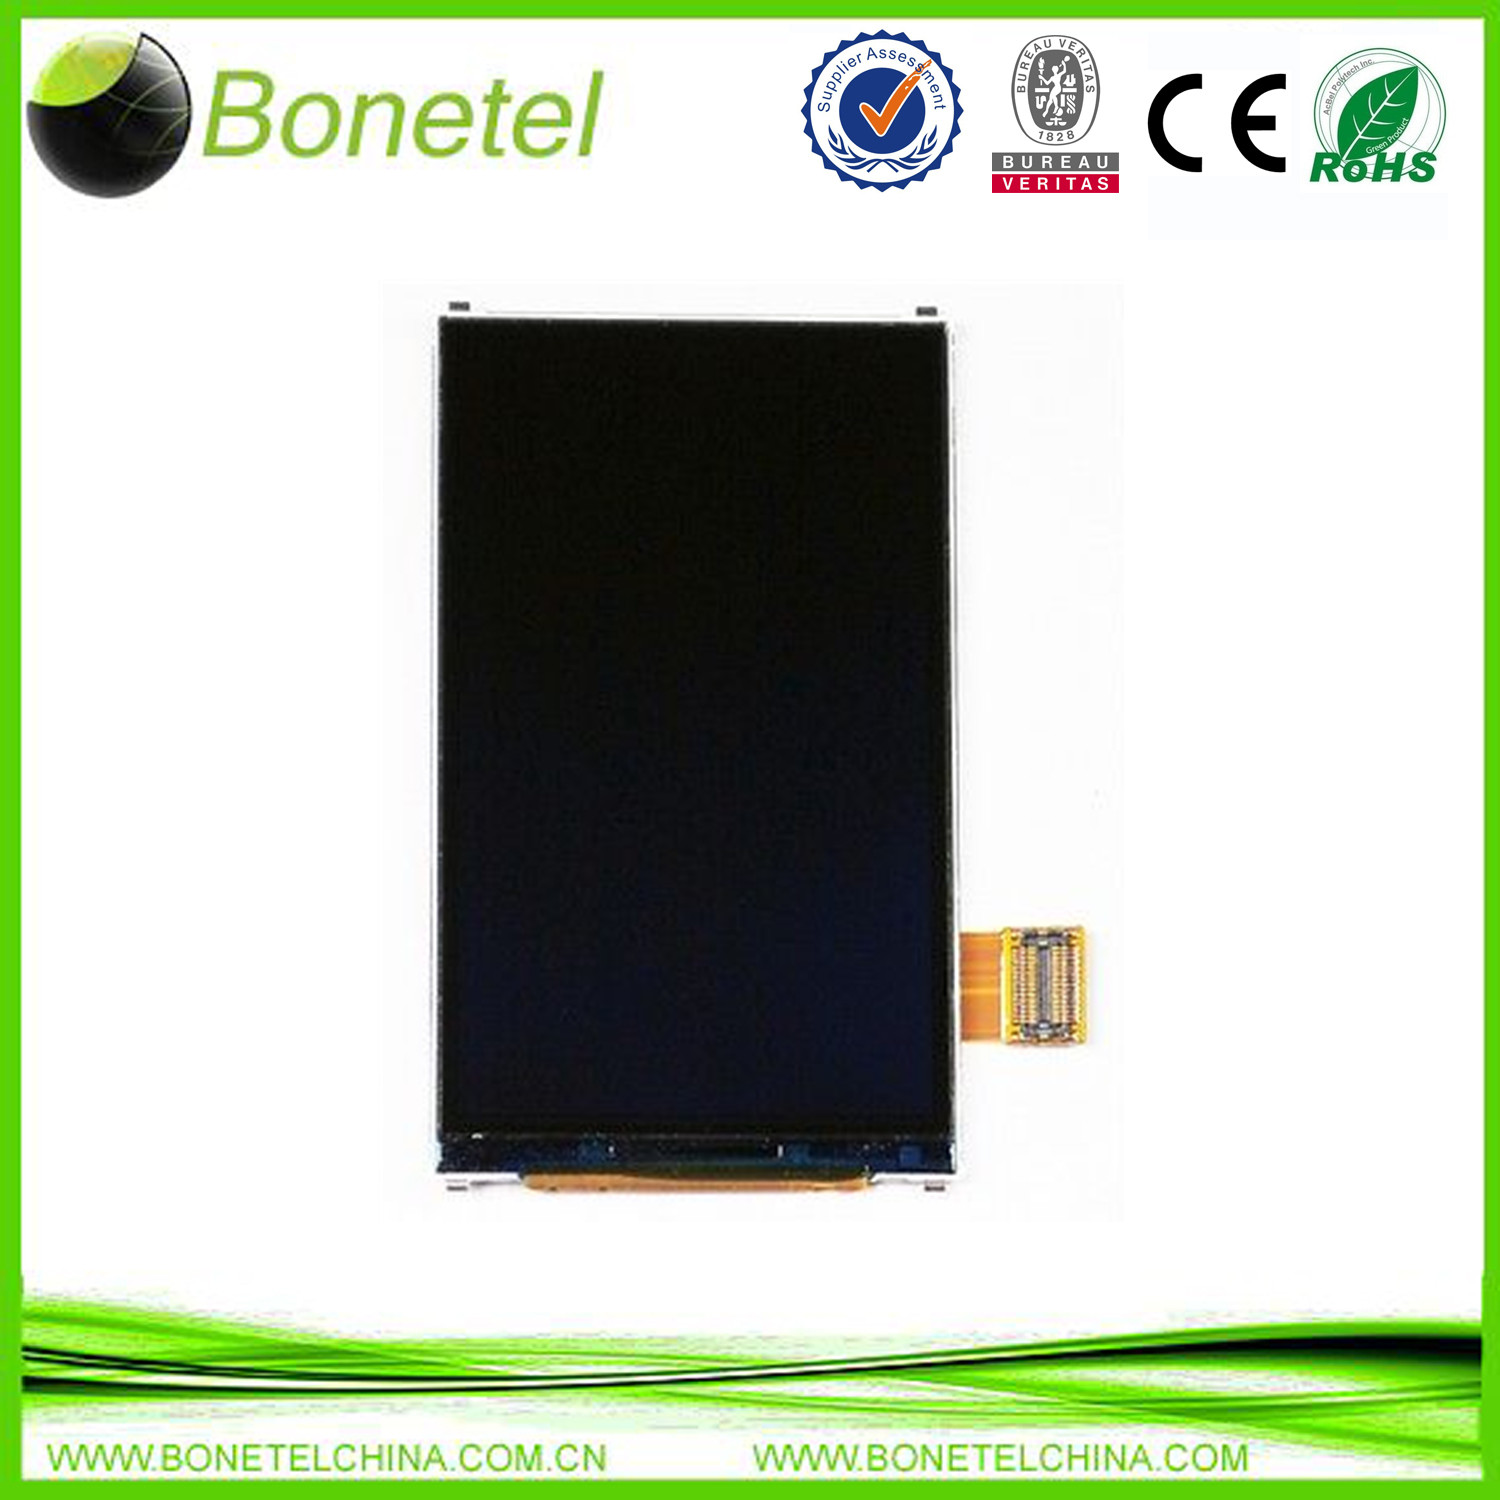 LCD for Samsung LCDSAMI6330/I6330